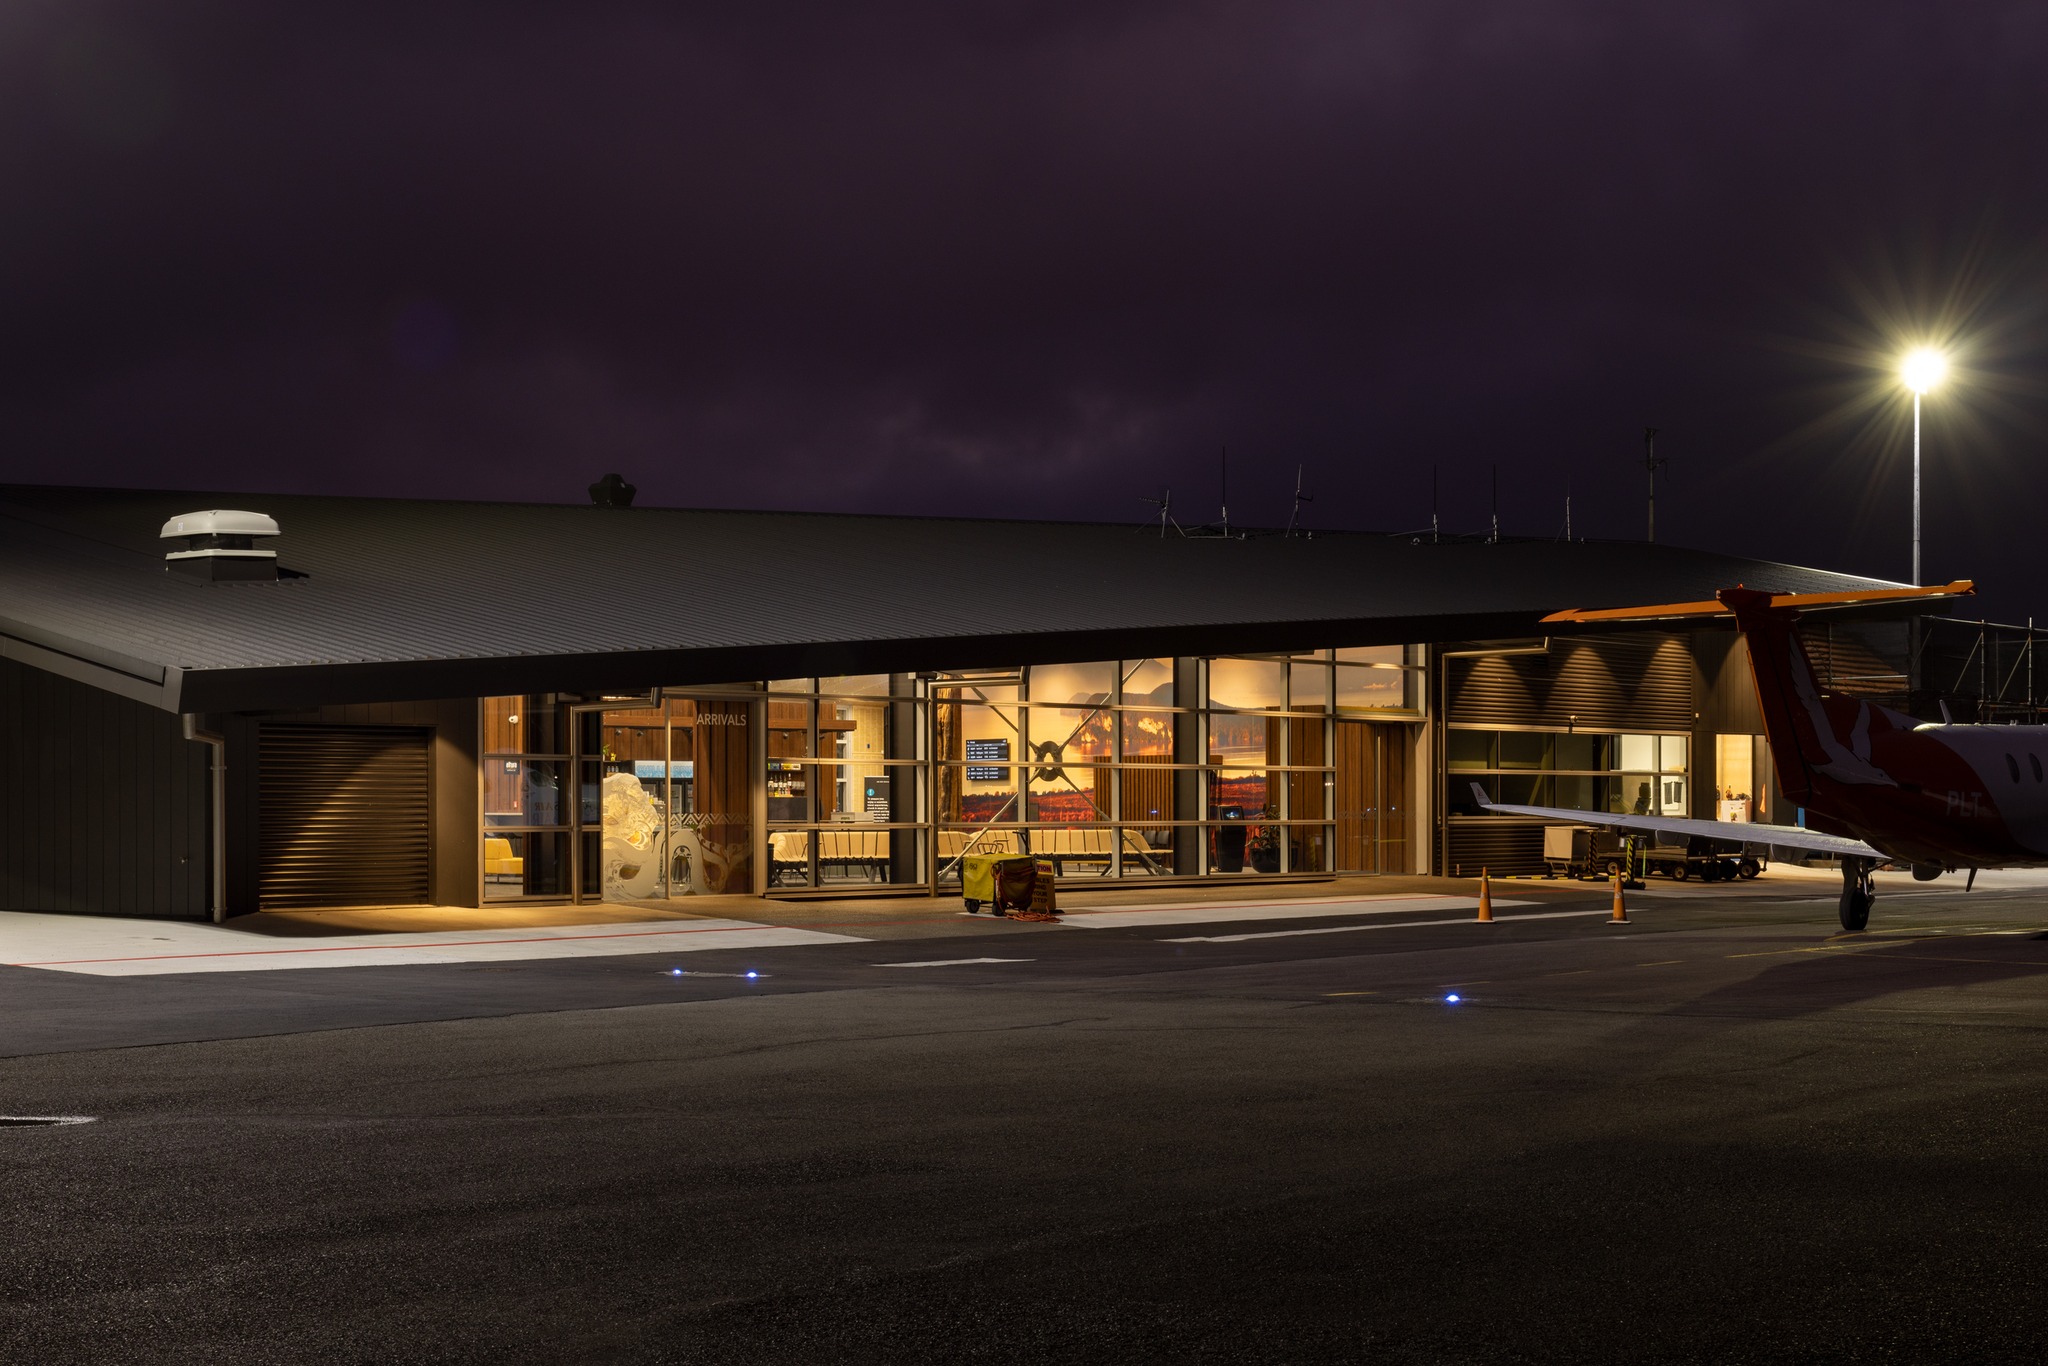 New airport terminal at night.  